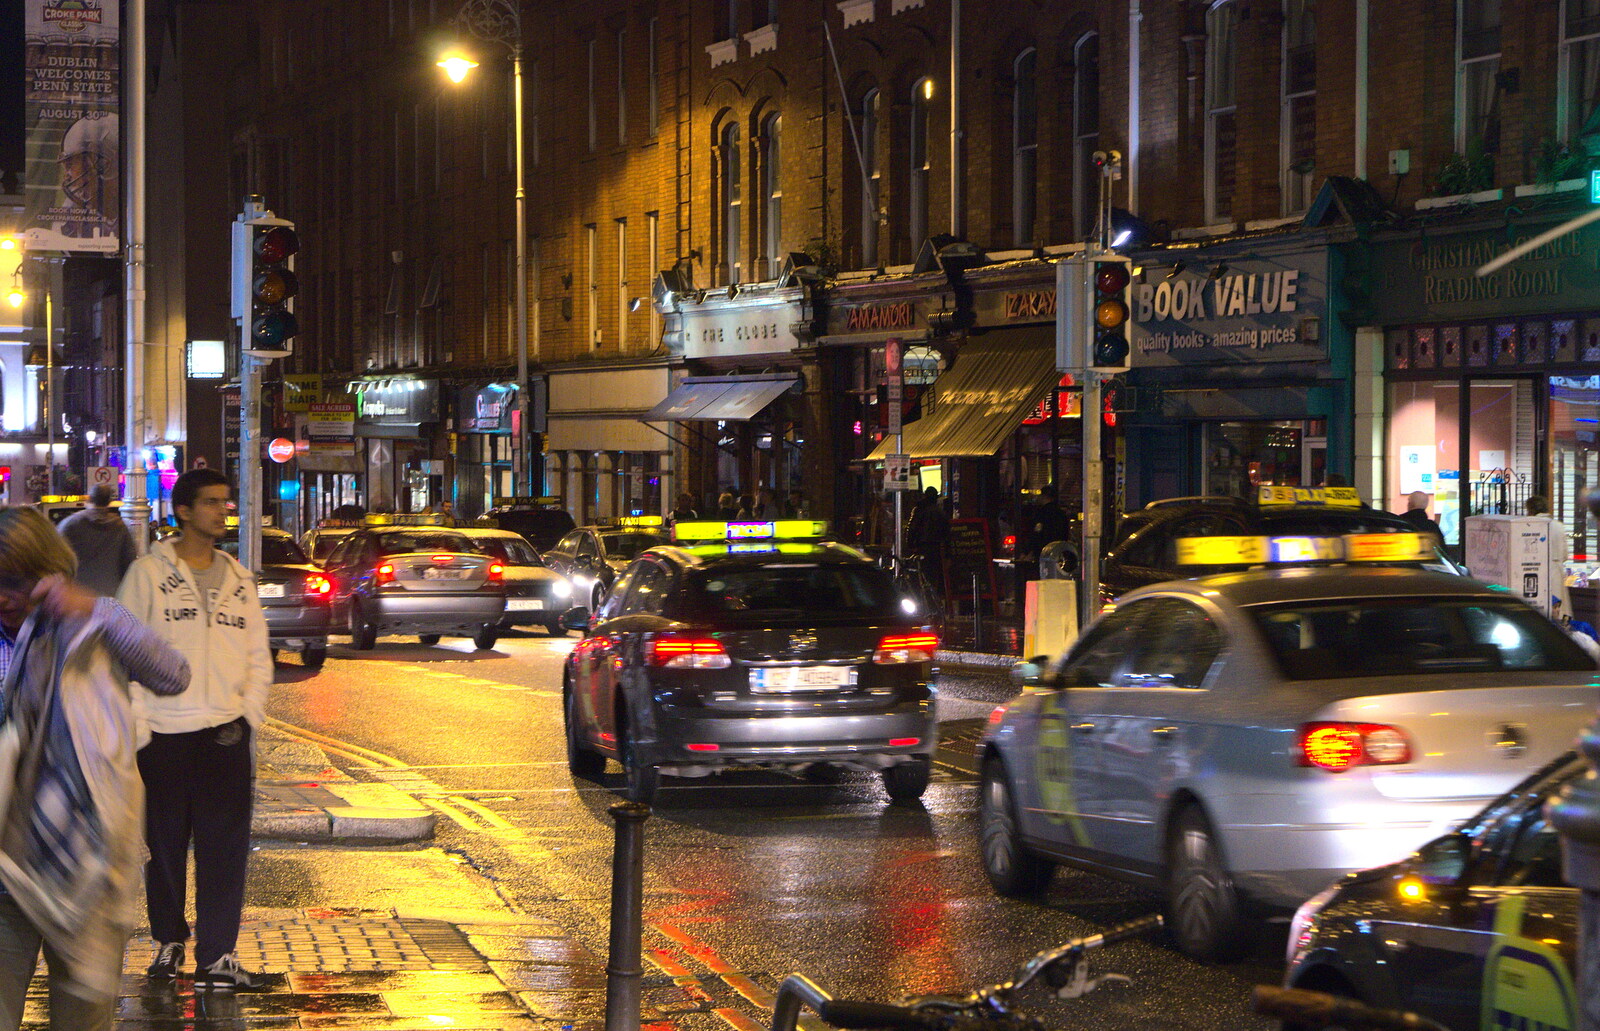 A Dublin street from A Night Out in Dublin, County Dublin, Ireland - 9th August 2014